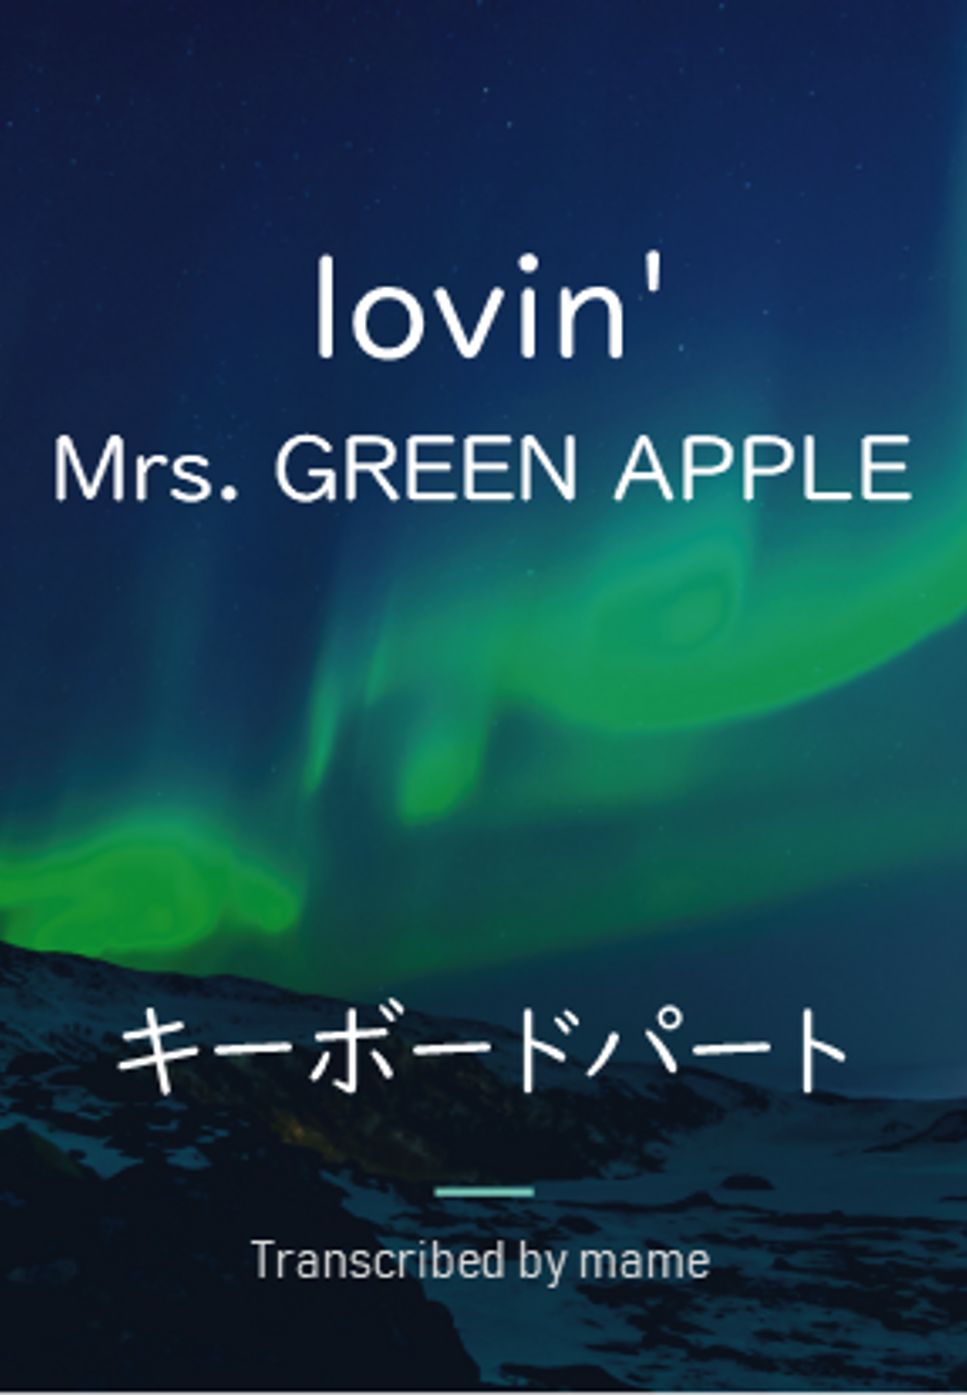 Mrs. GREEN APPLE - lovin' (キーボードパート) by mame